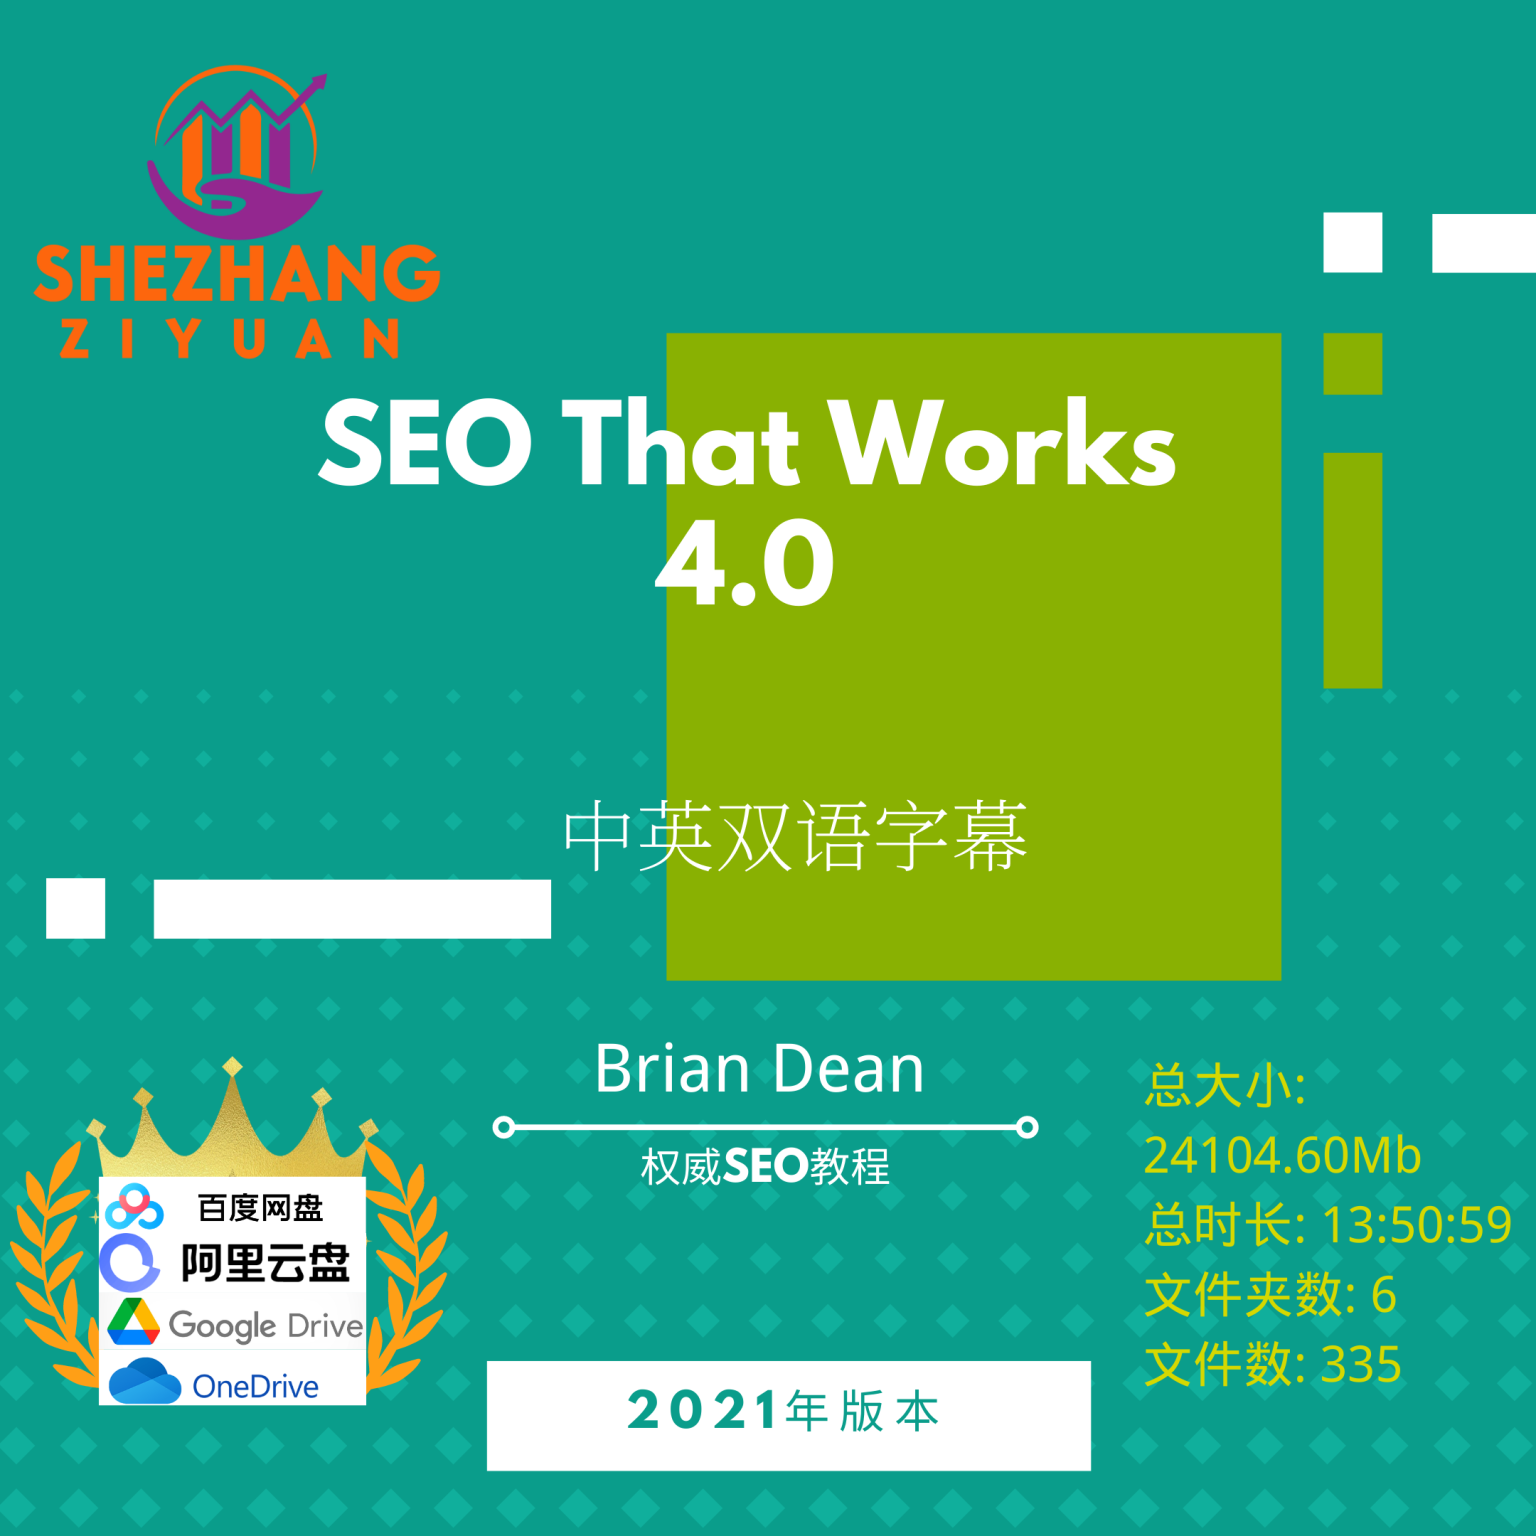 Brian Dean – SEO That Works 4.0 权威SEO教程niche站